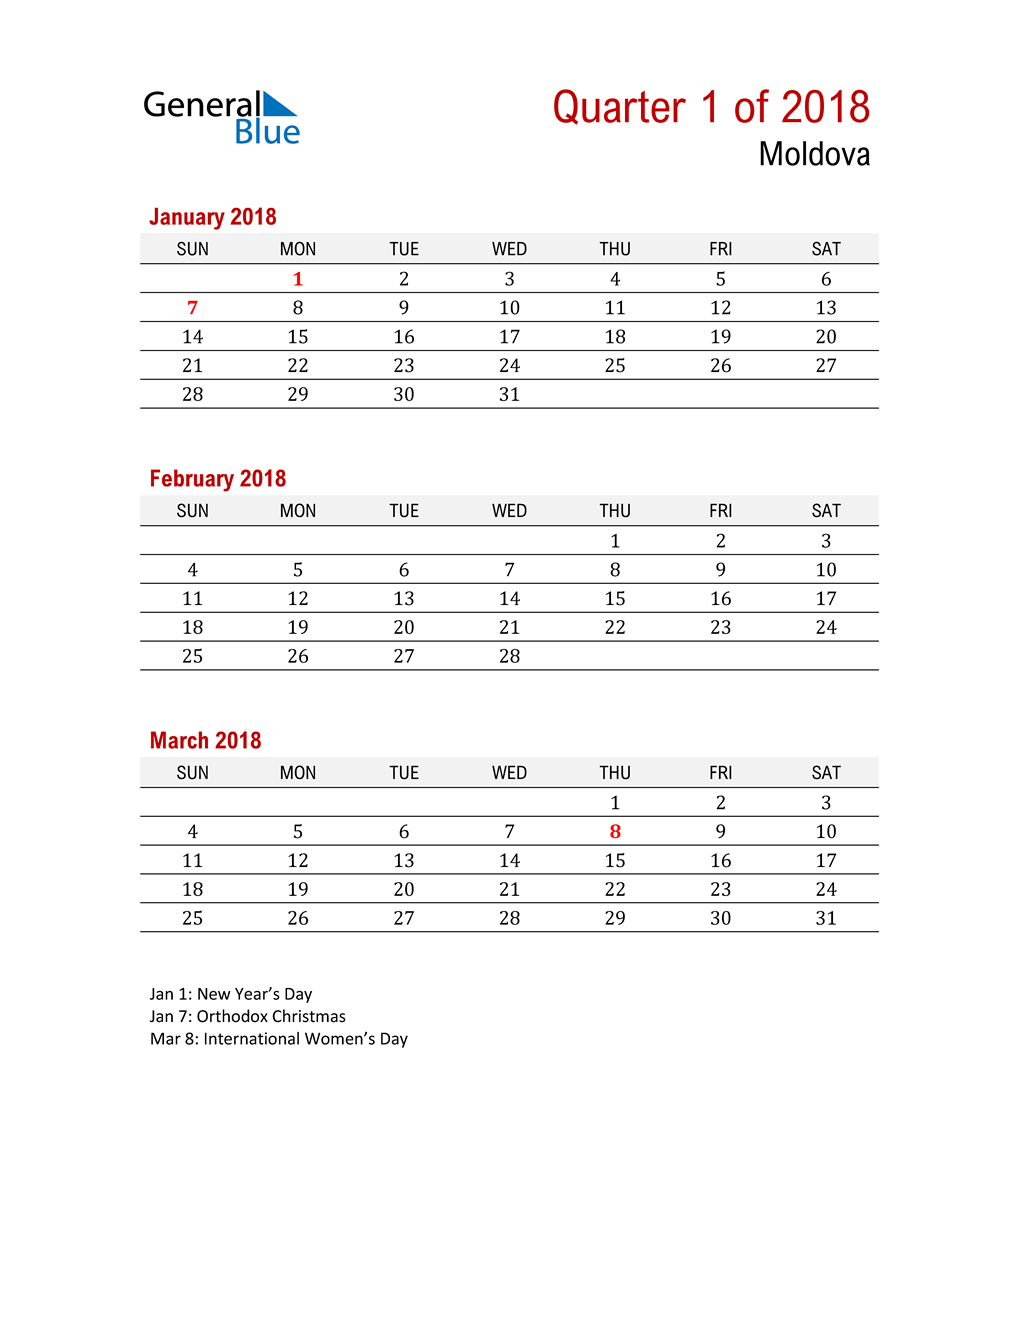  Printable Three Month Calendar for Moldova